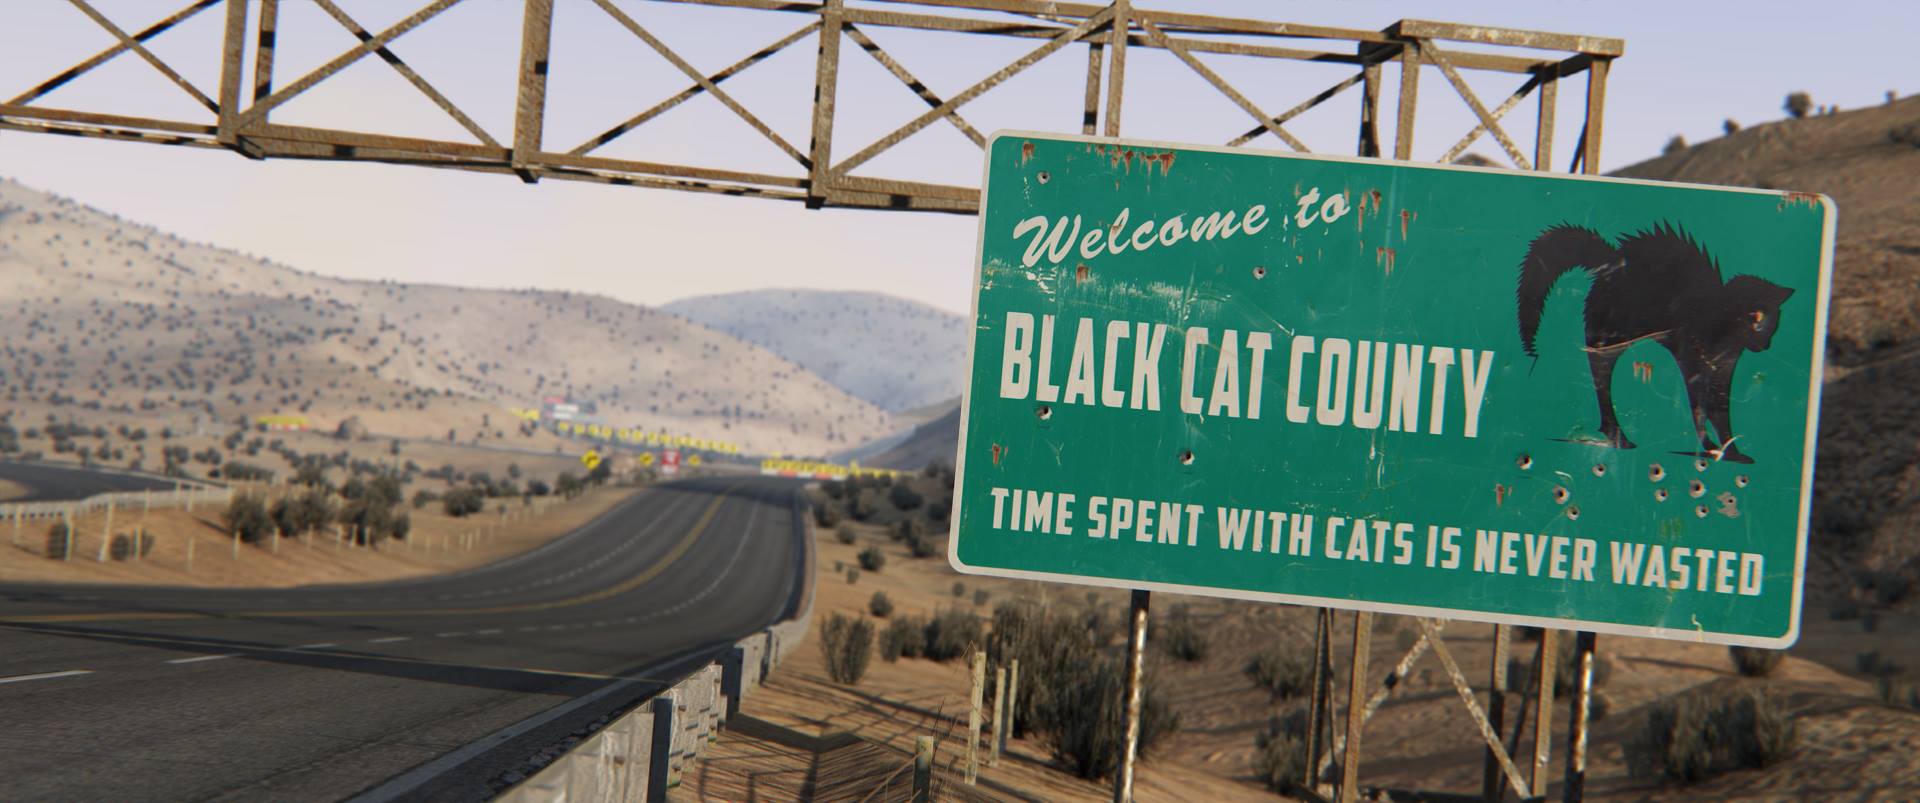 AC Black Cat County.jpg